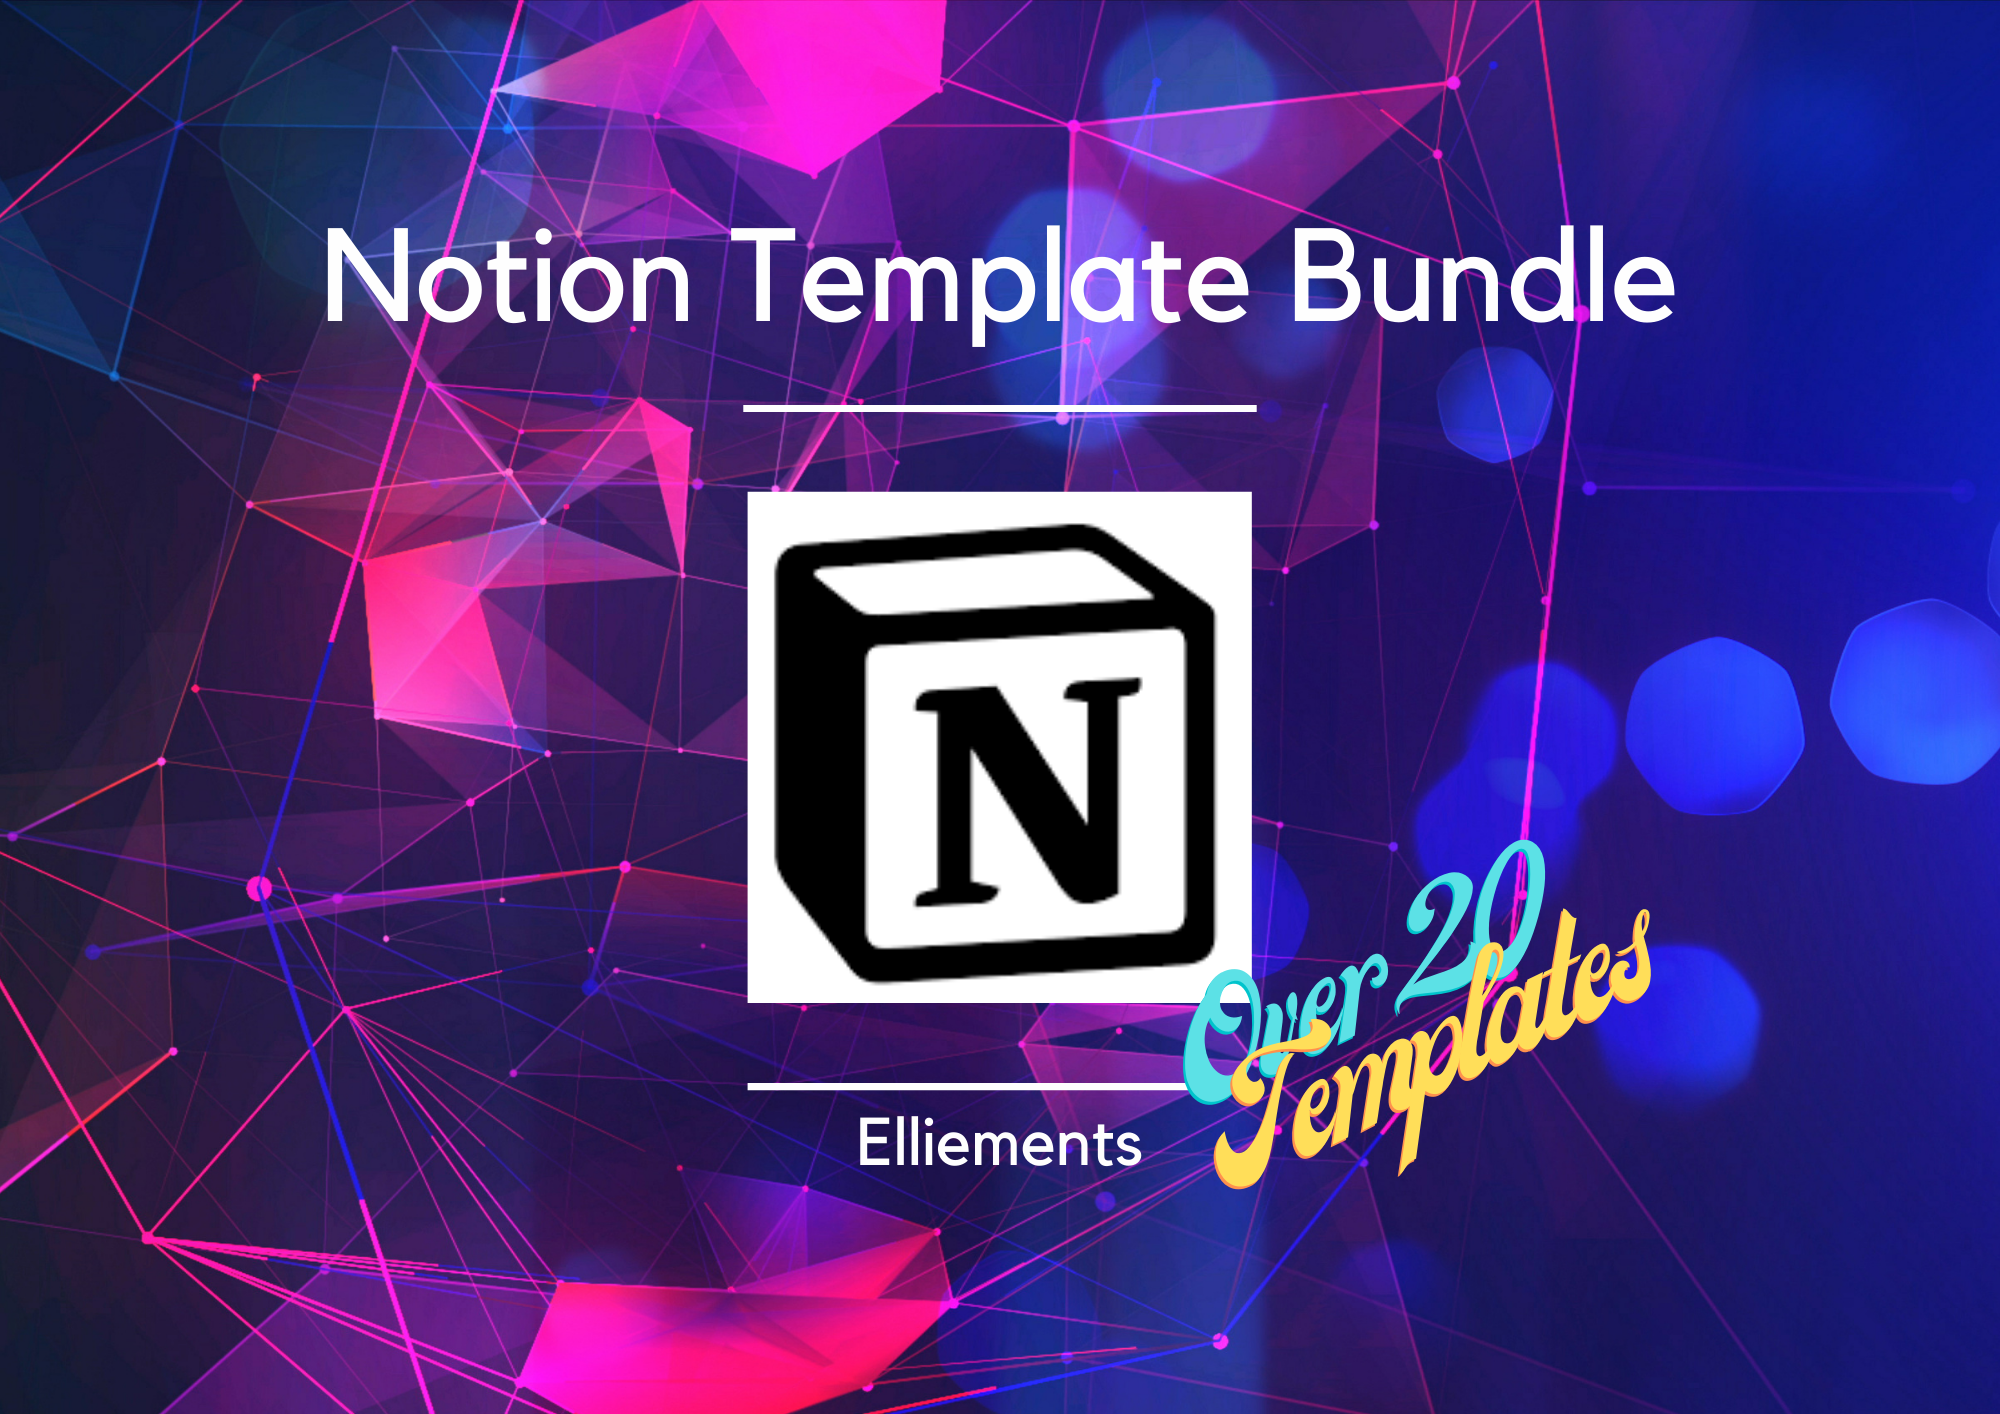 Notion template bundle planner